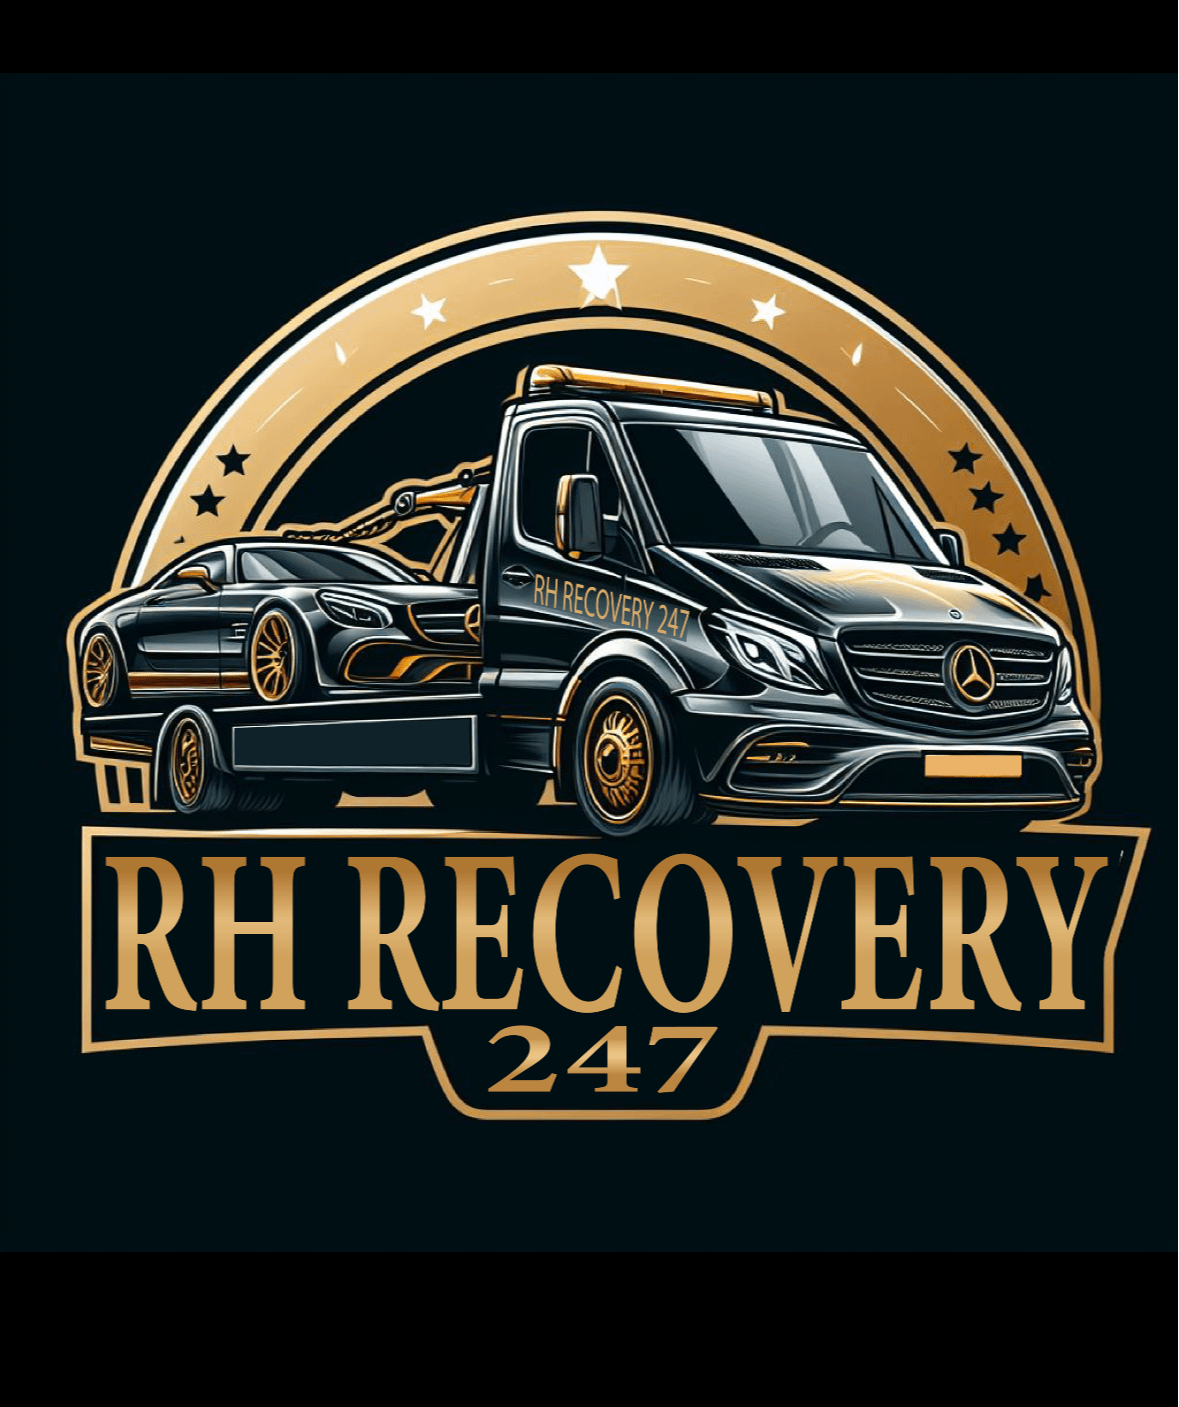 RH RECOVERY 24/7